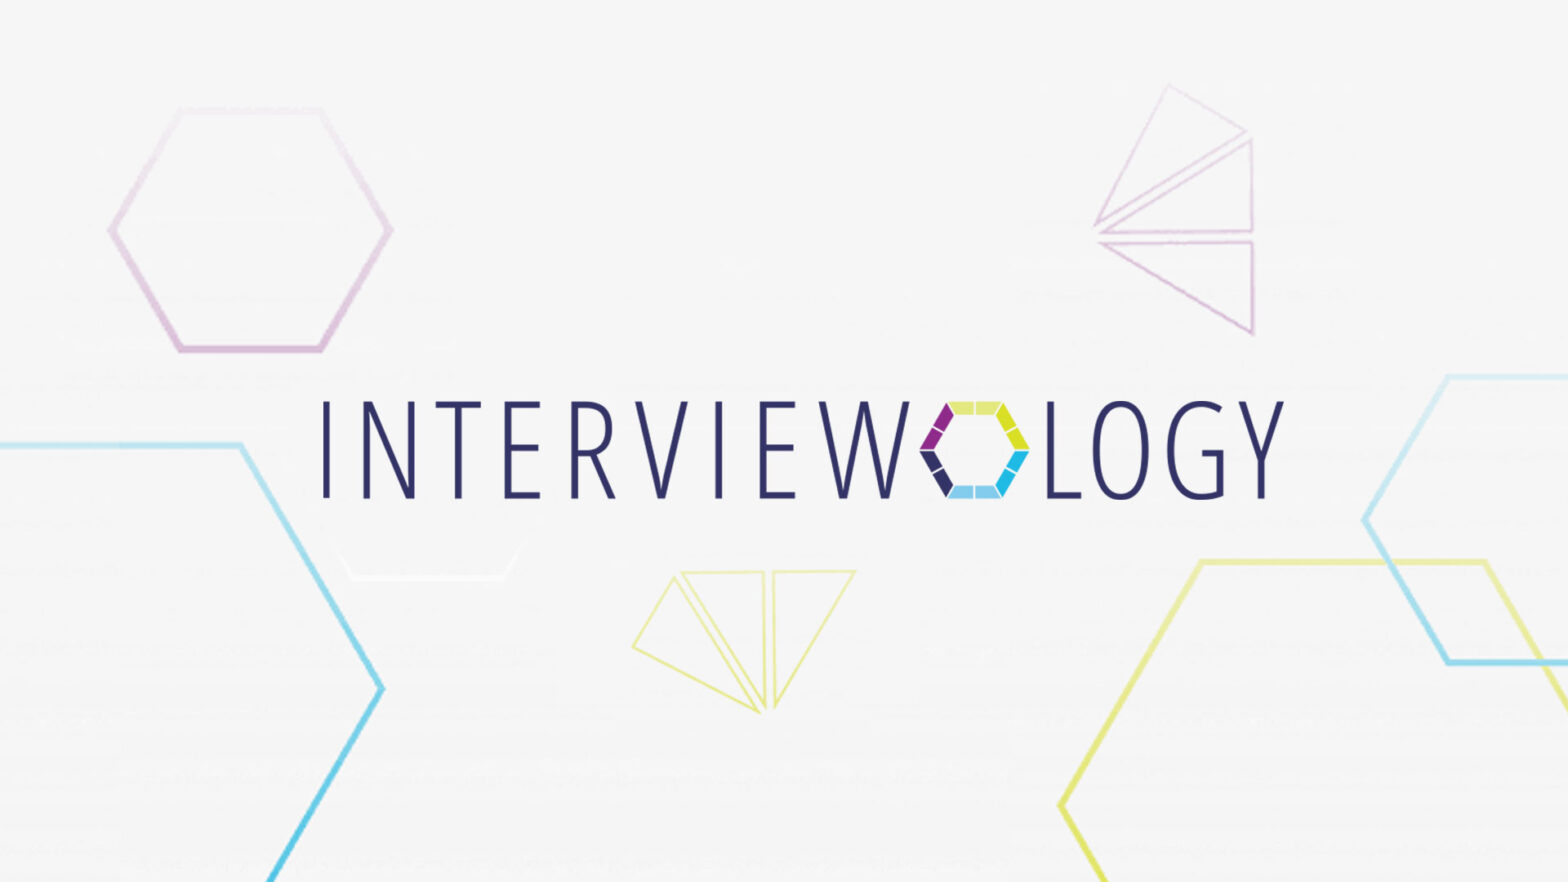 interviewology logo